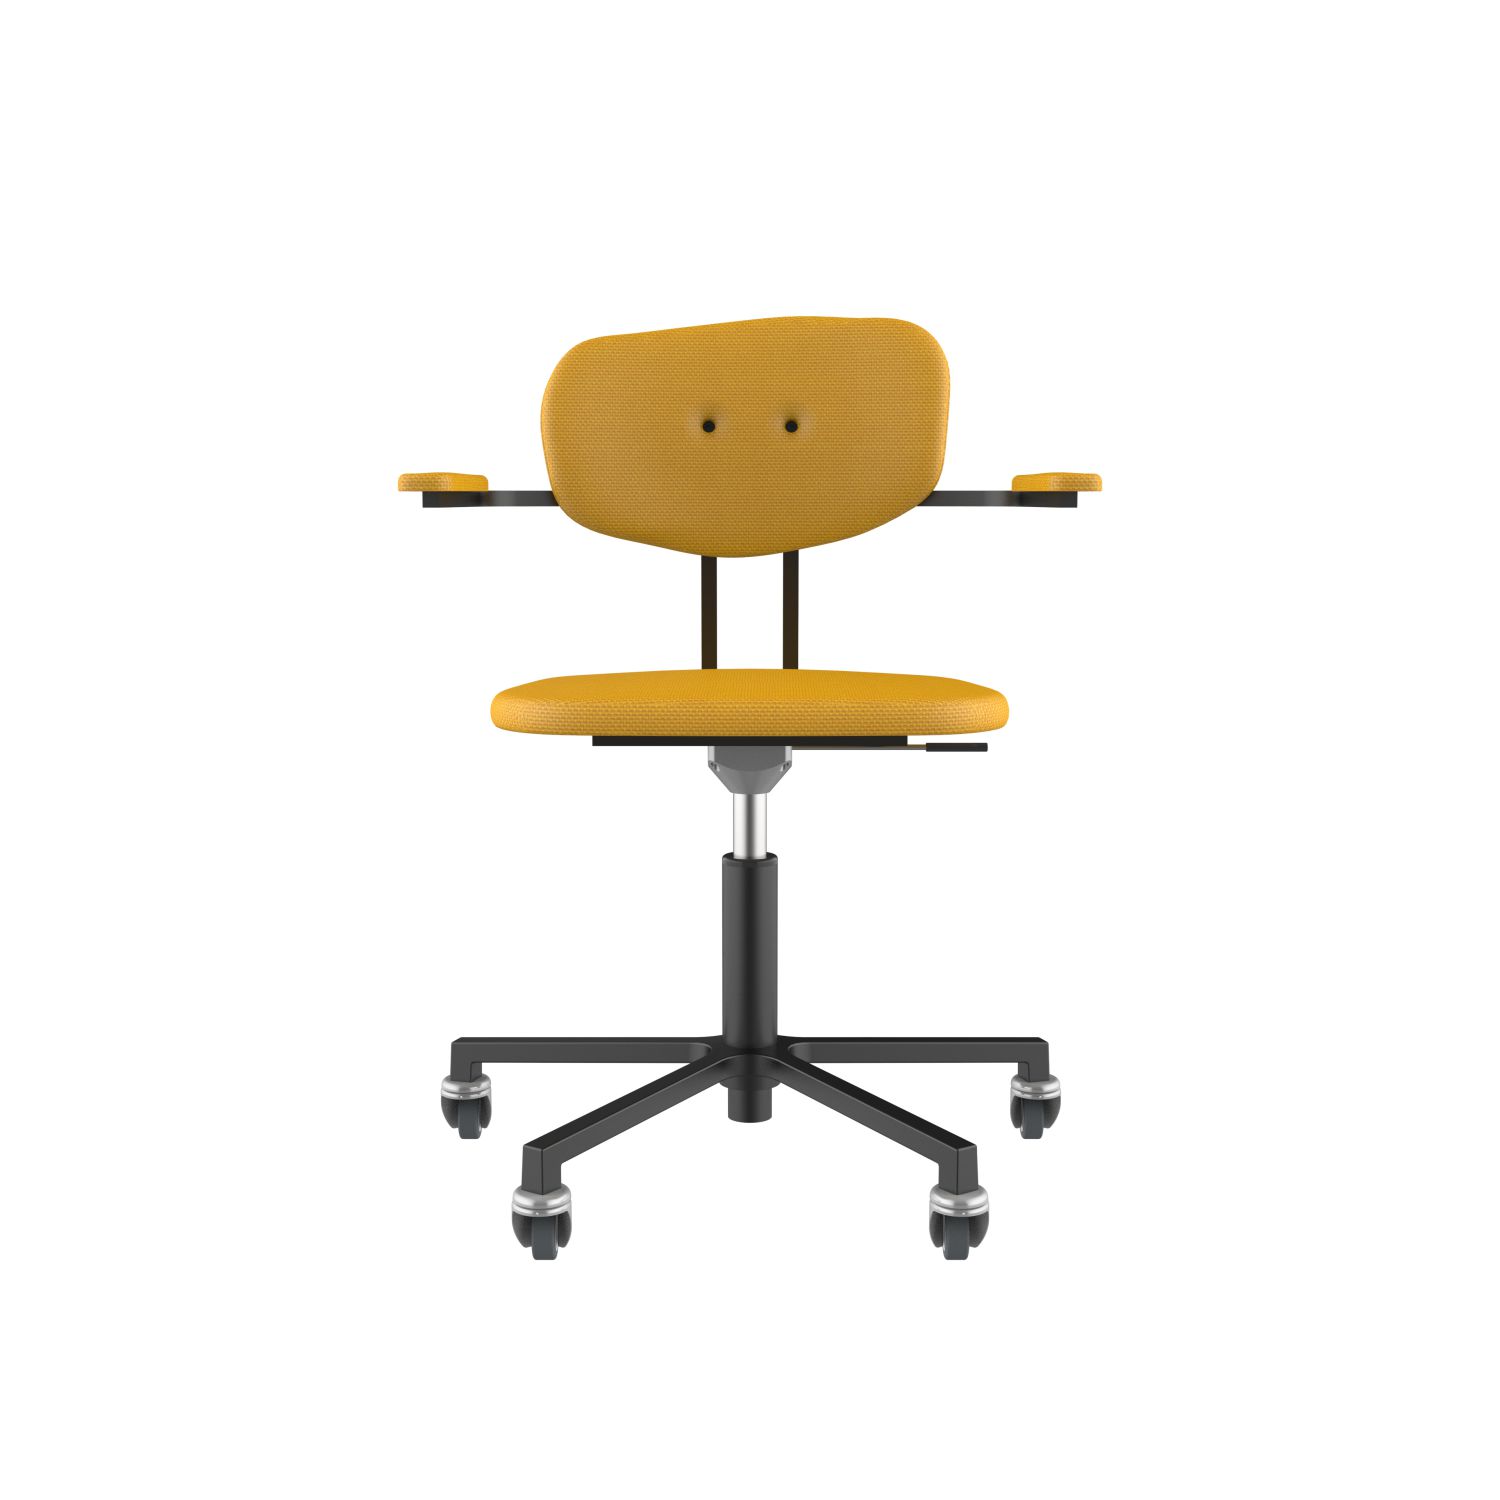 lensvelt maarten baas office chair with armrests backrest c lemon yellow 051 black ral9005 soft wheels